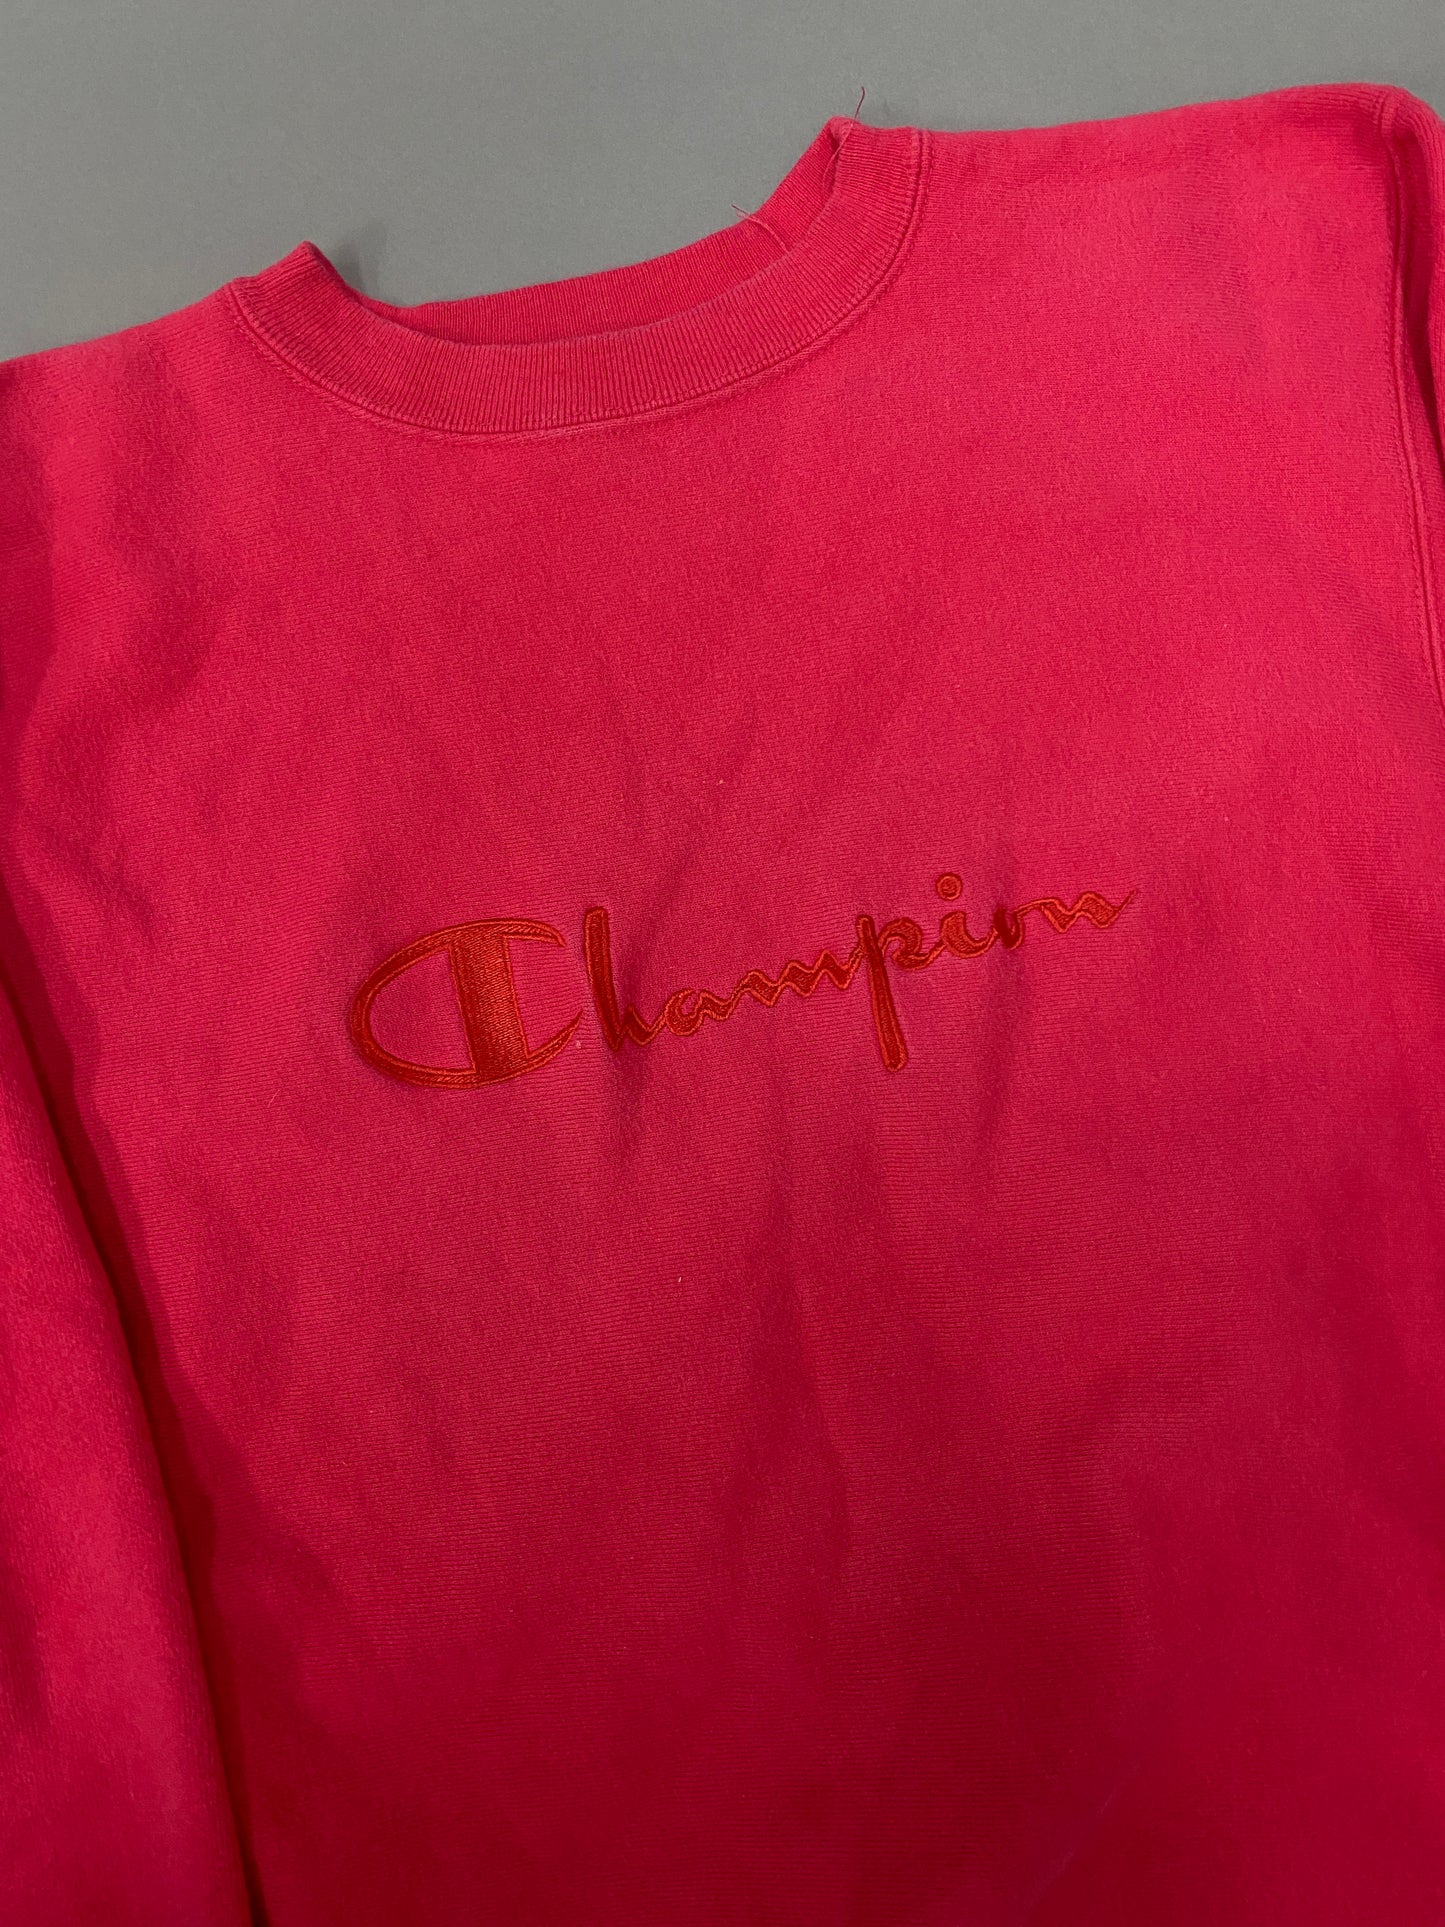 Champion 90's sweatshirt